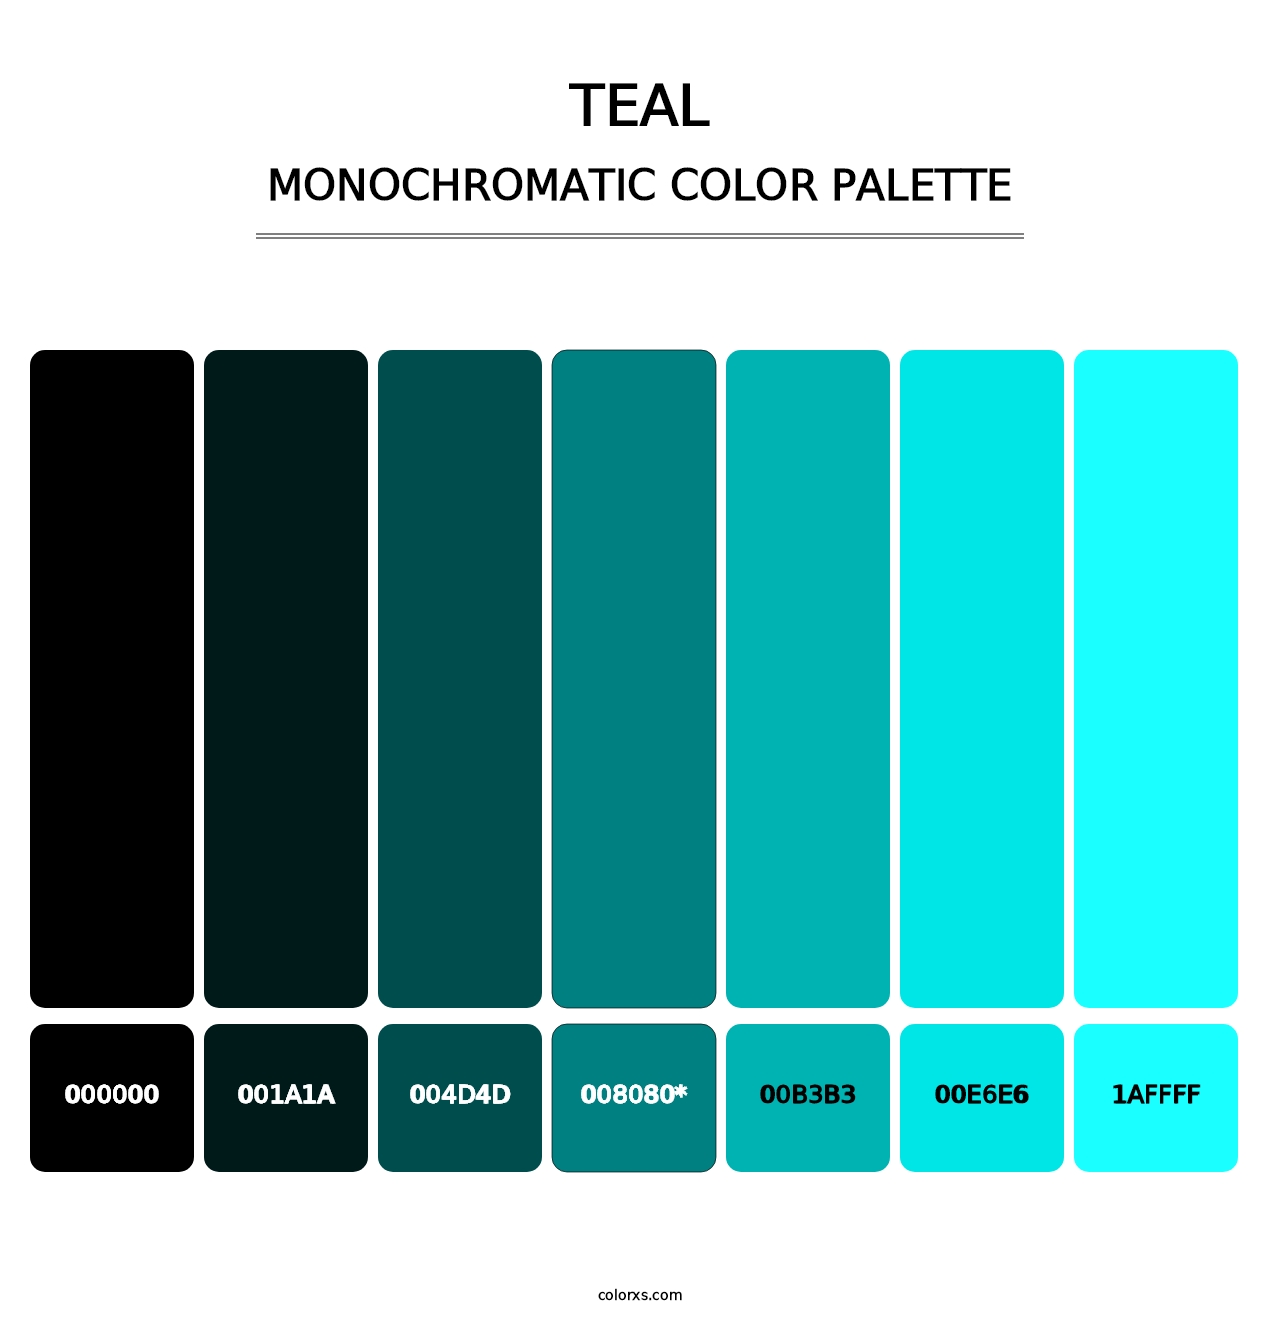 Teal - Monochromatic Color Palette